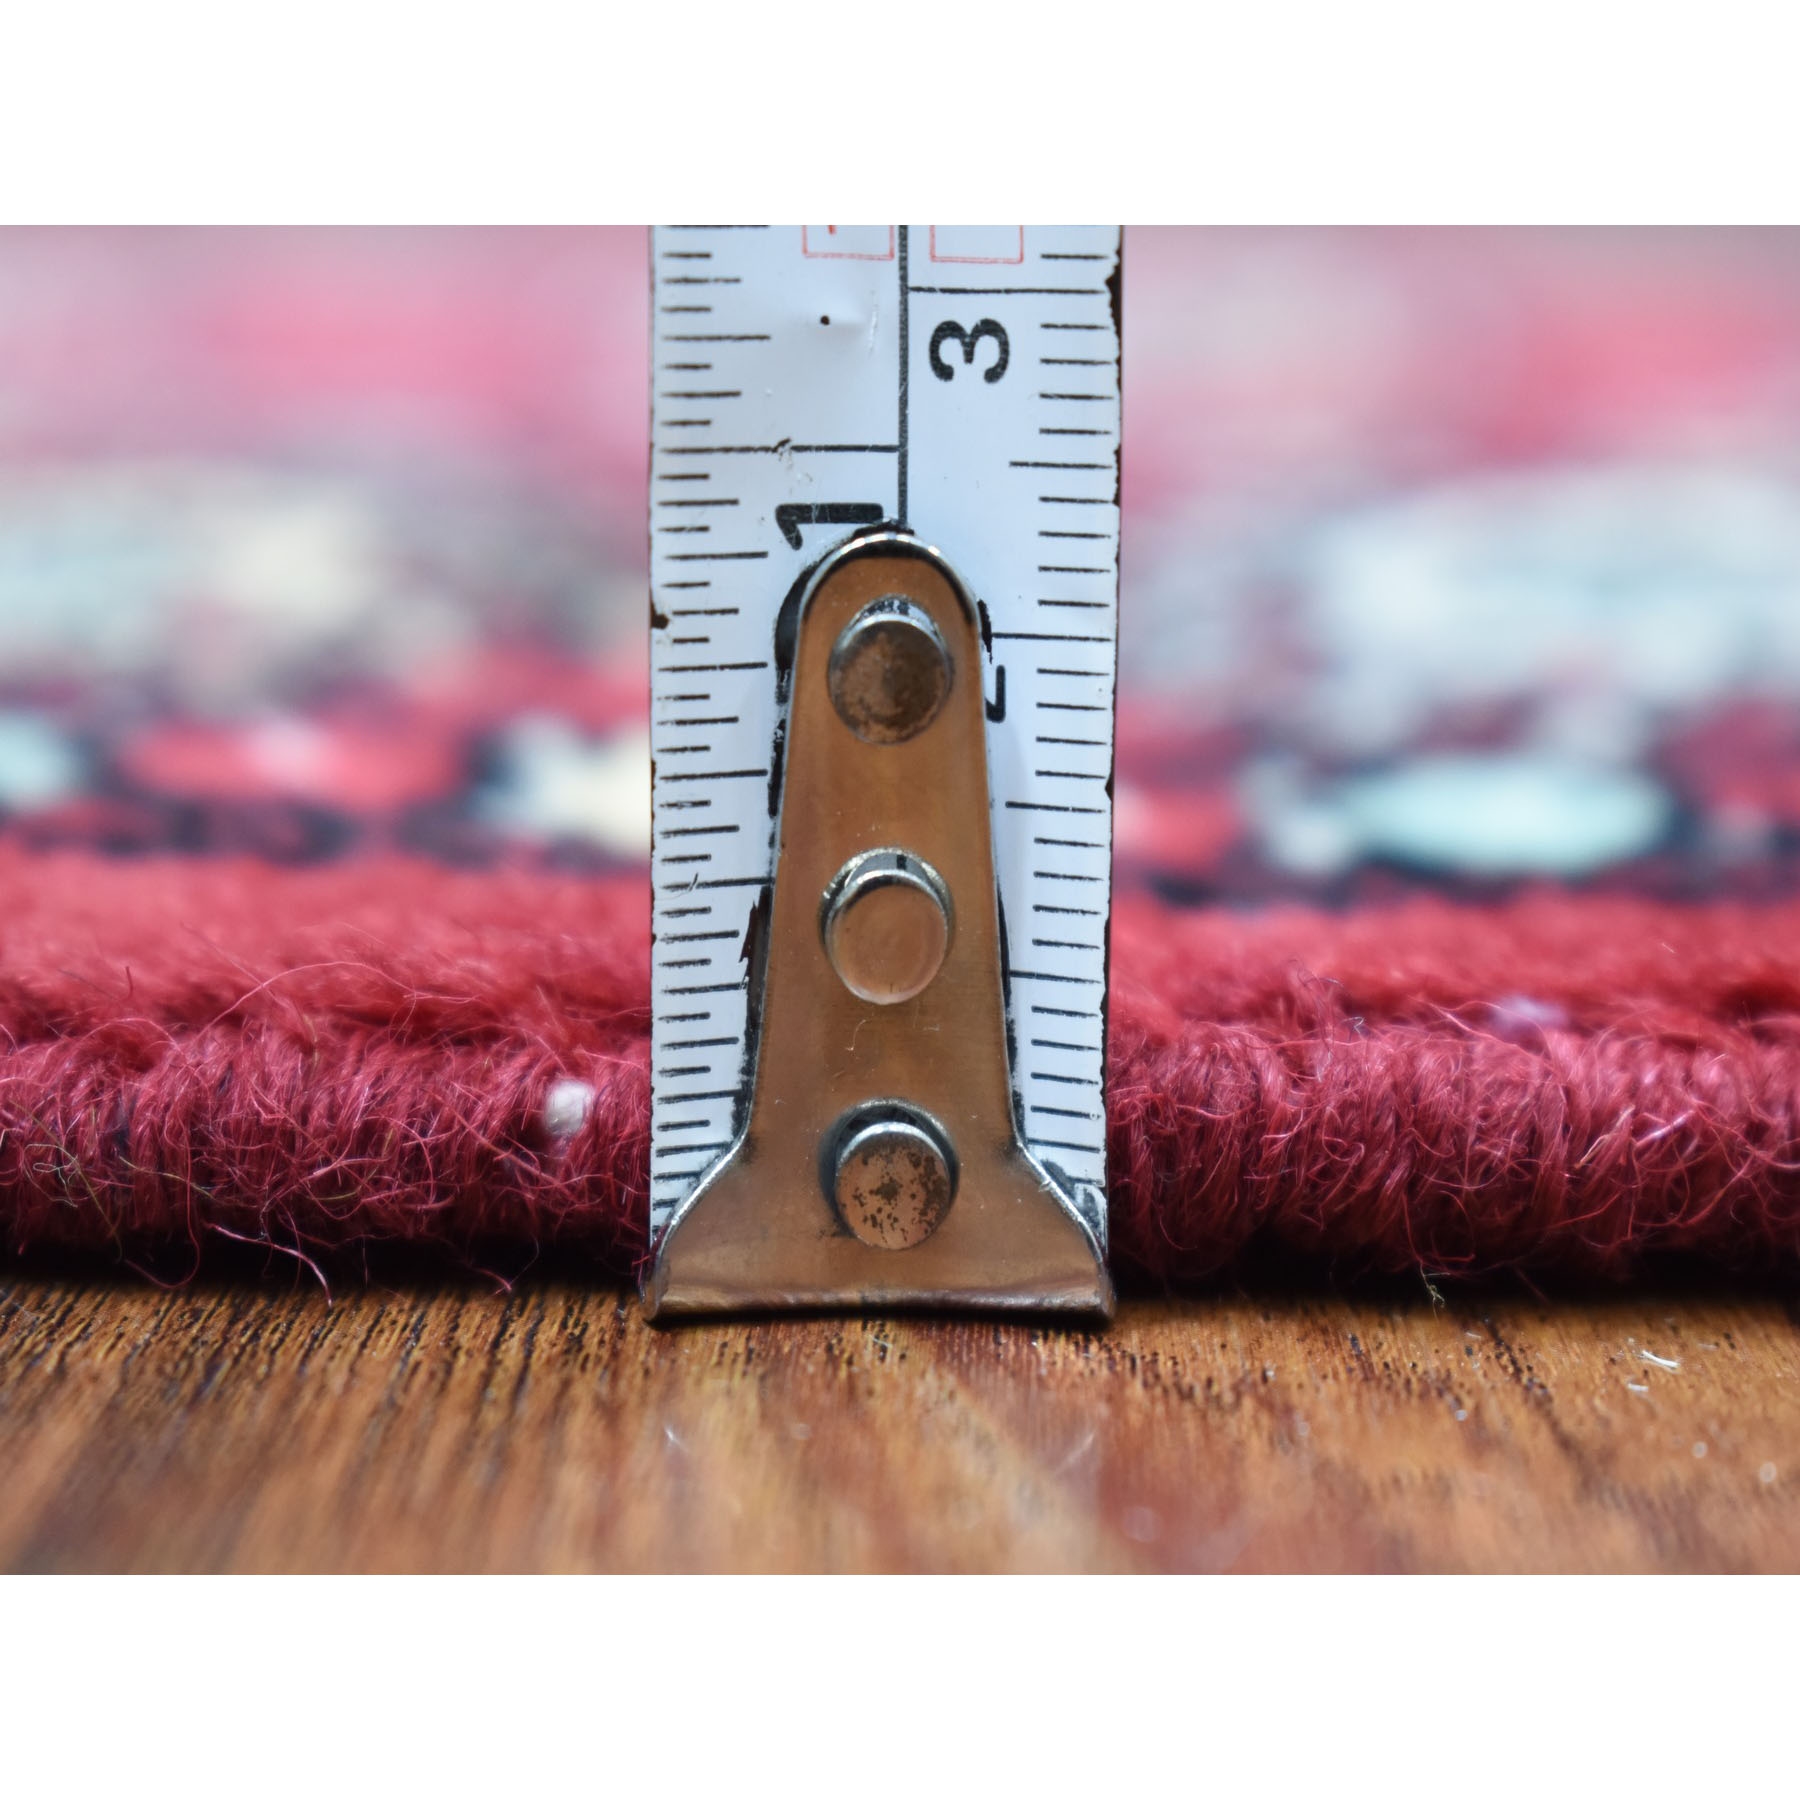 3'x4'10" Rich Red Mori Bokara Hand Woven Silky Wool Oriental Rug 